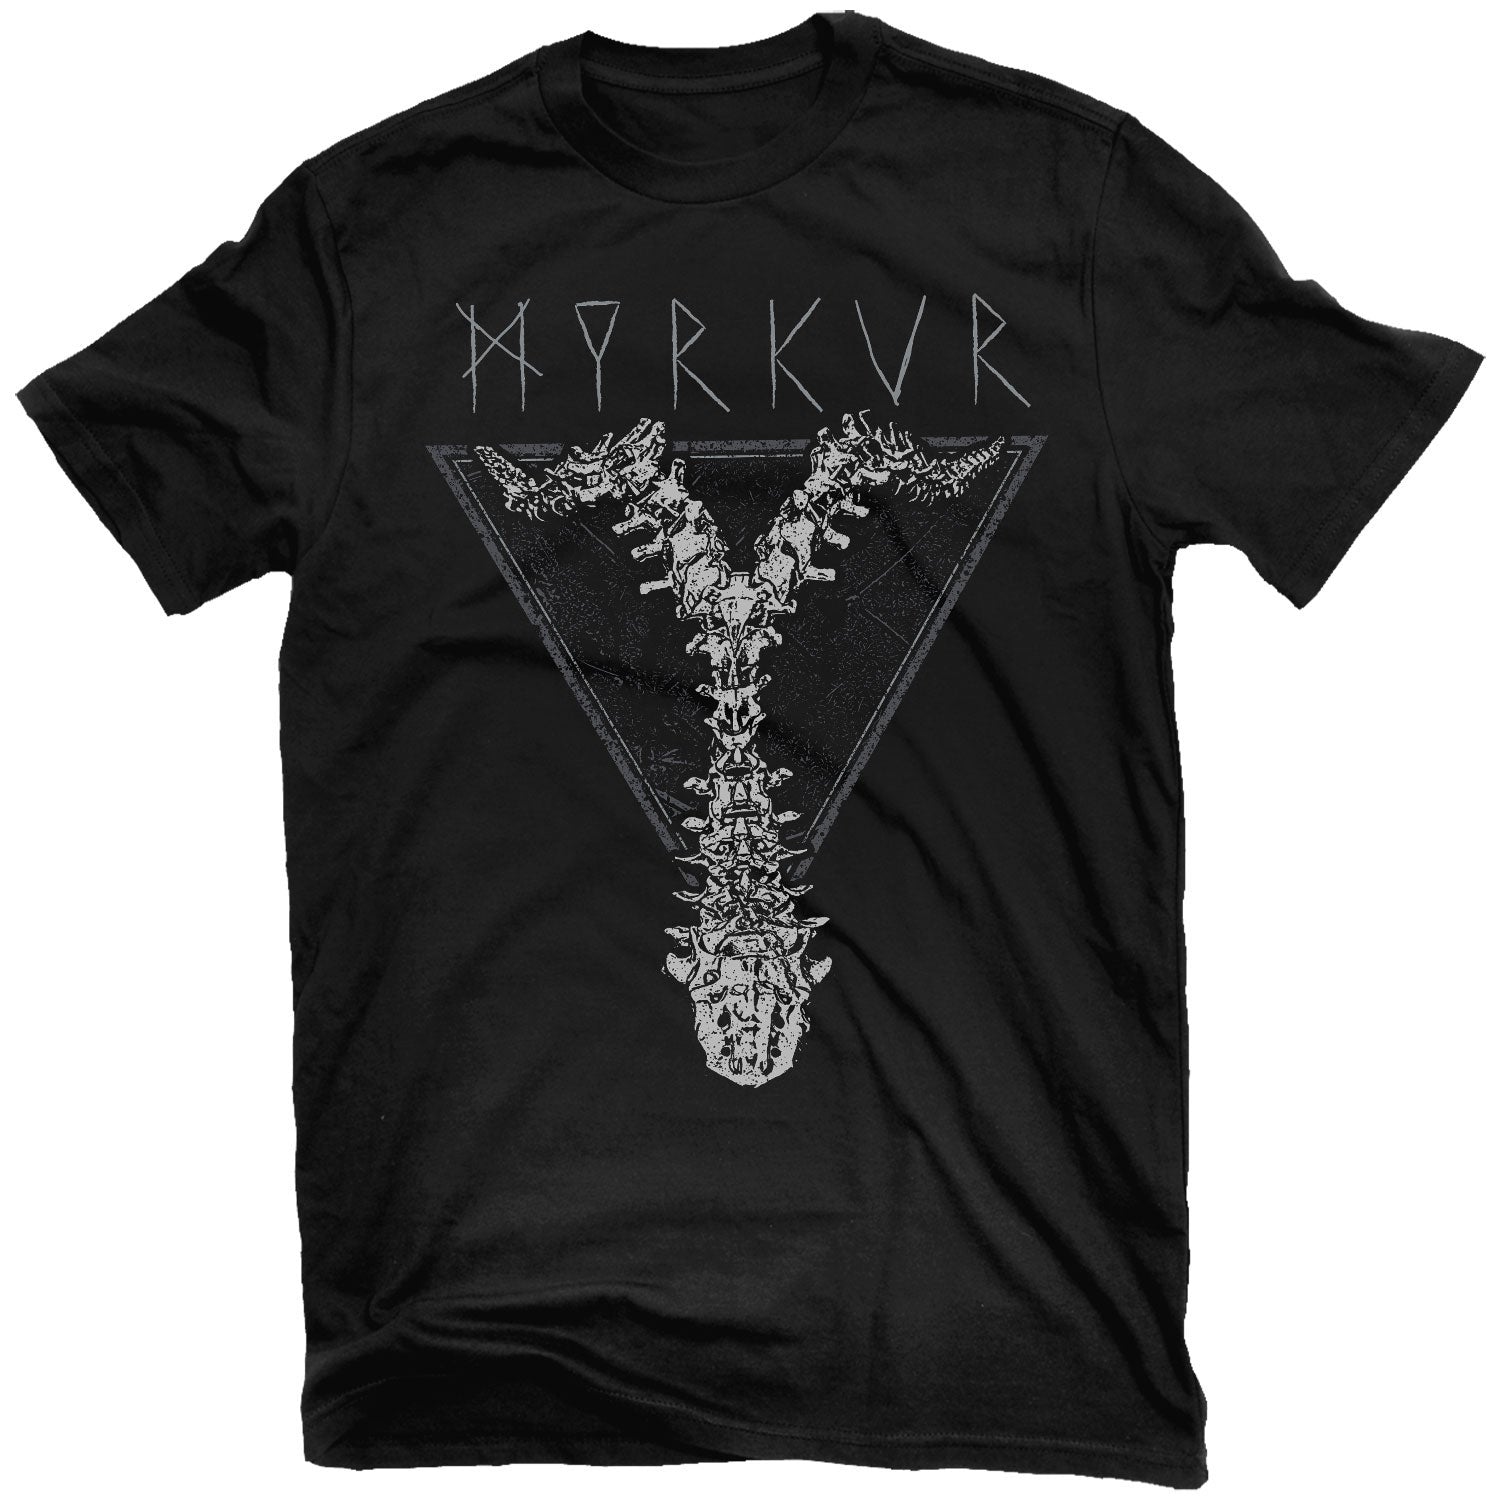 Myrkur "Spine" T-Shirt